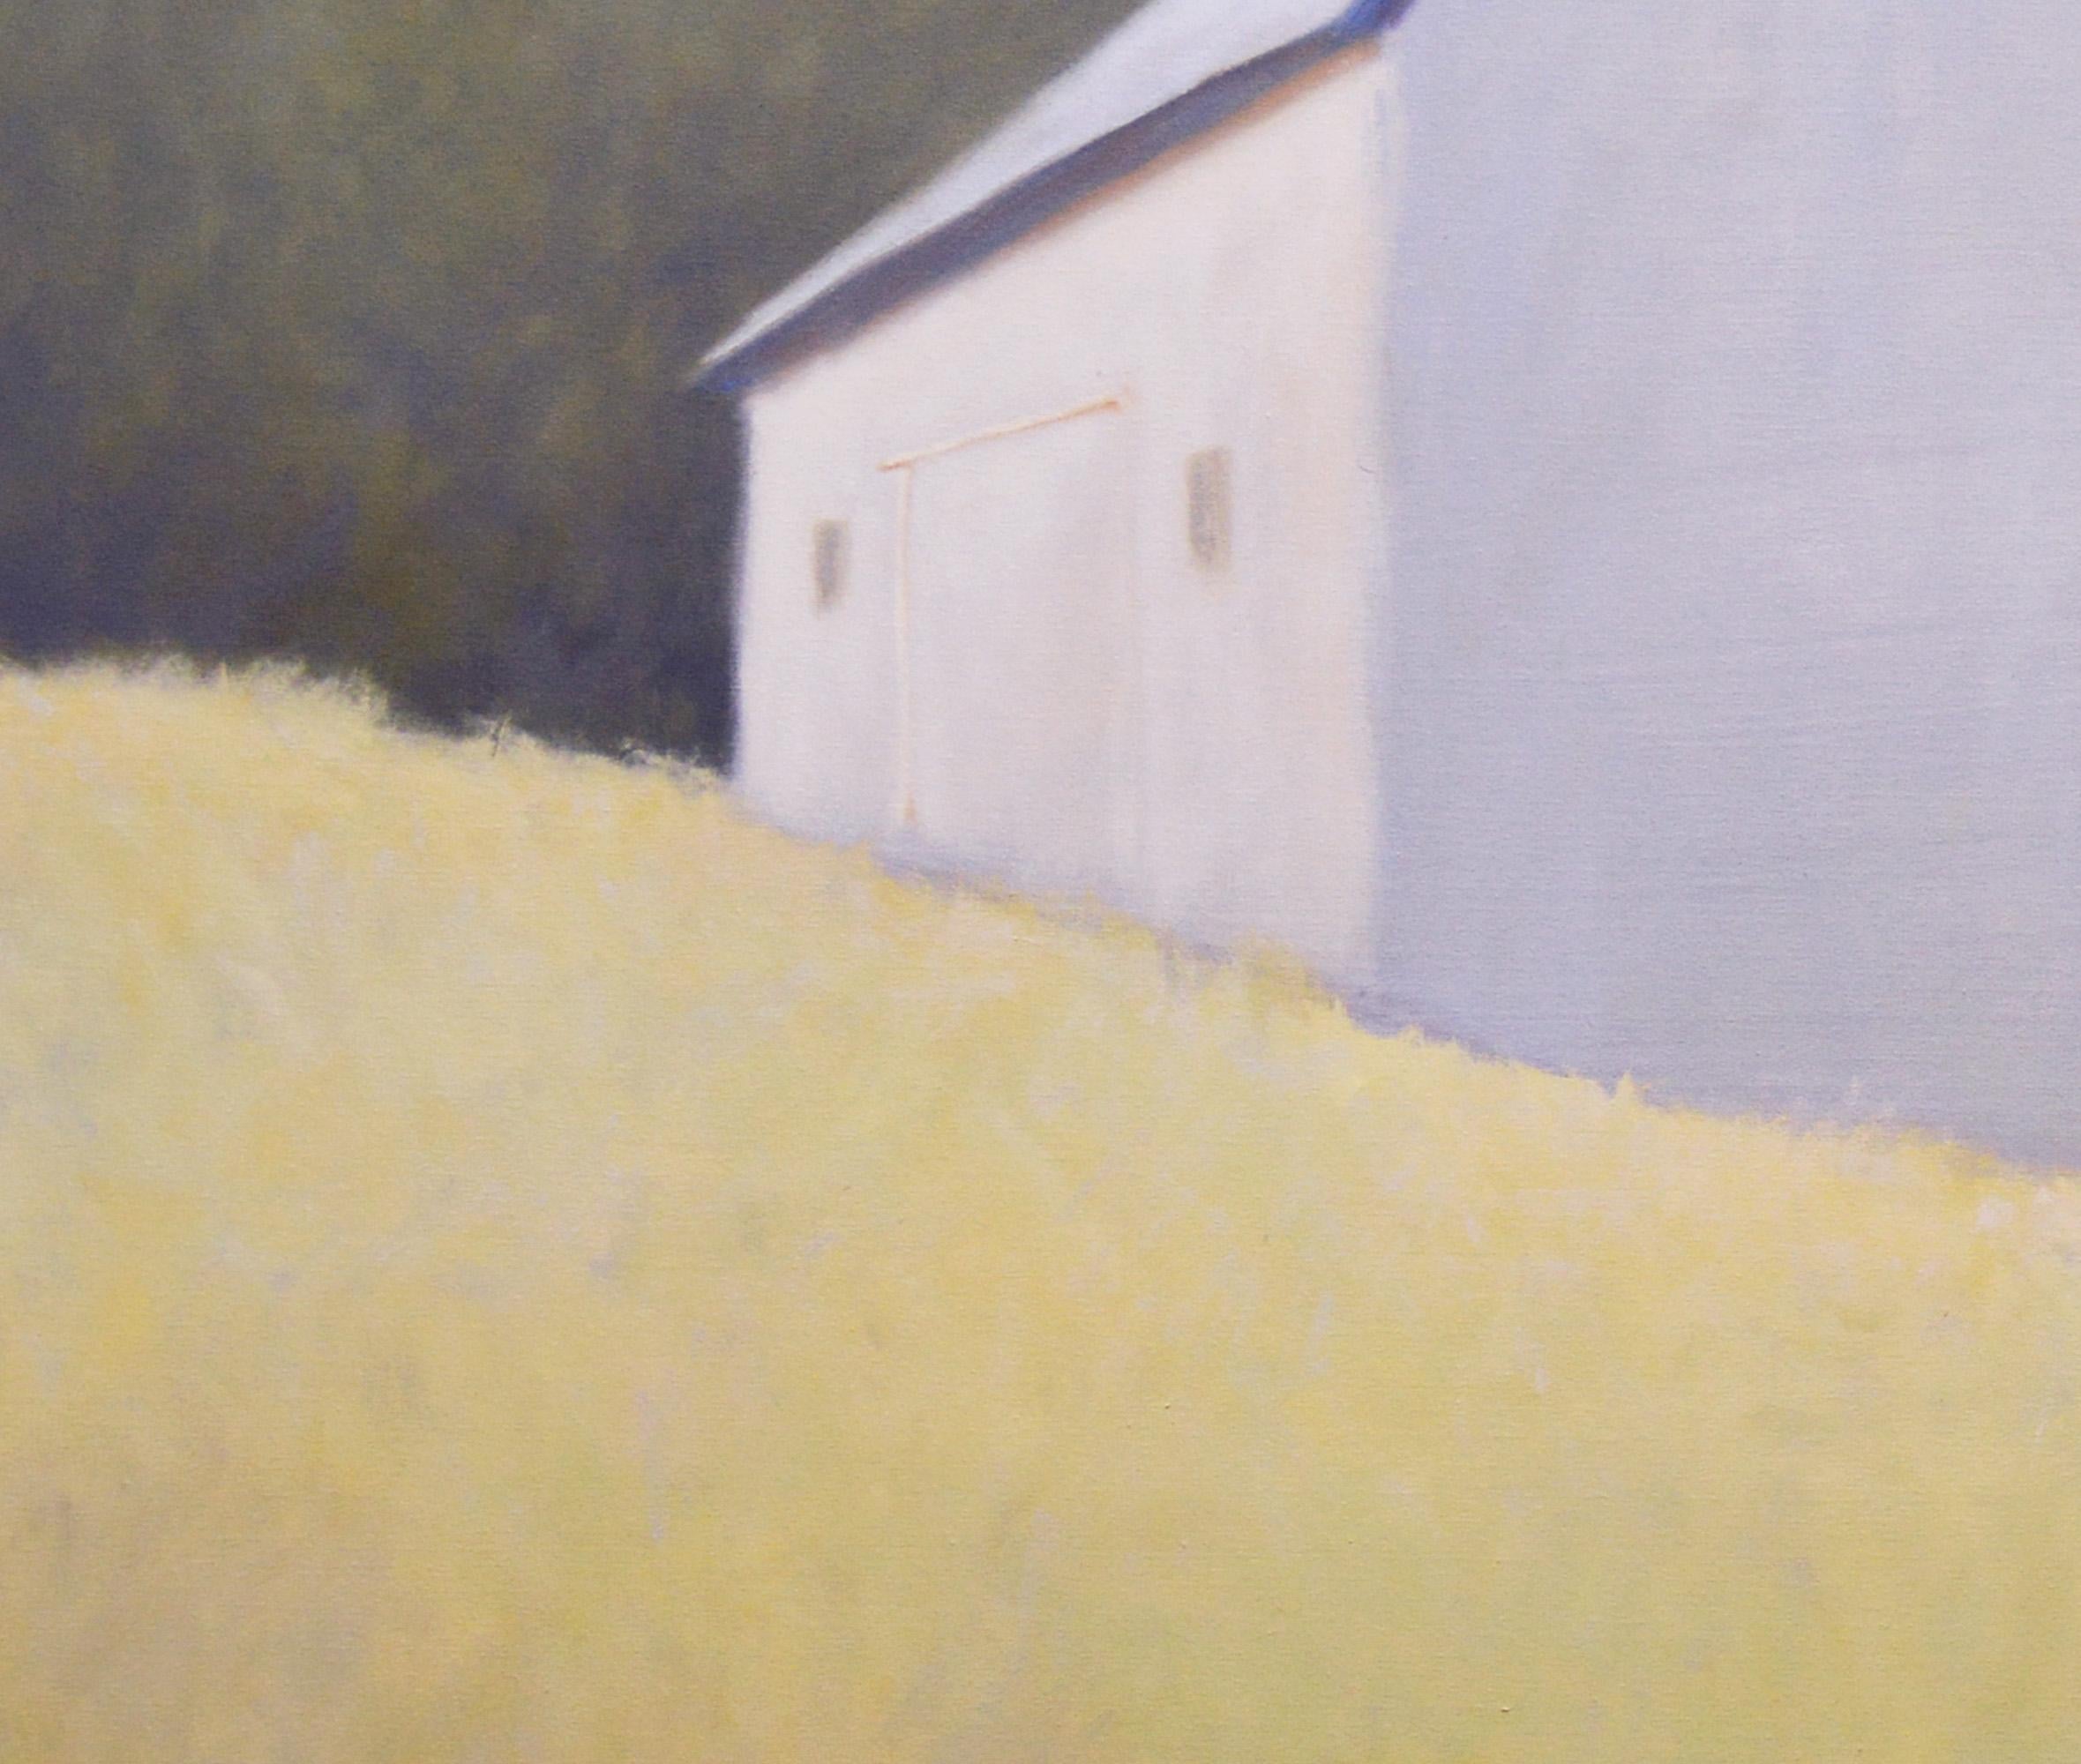 paintings of barns